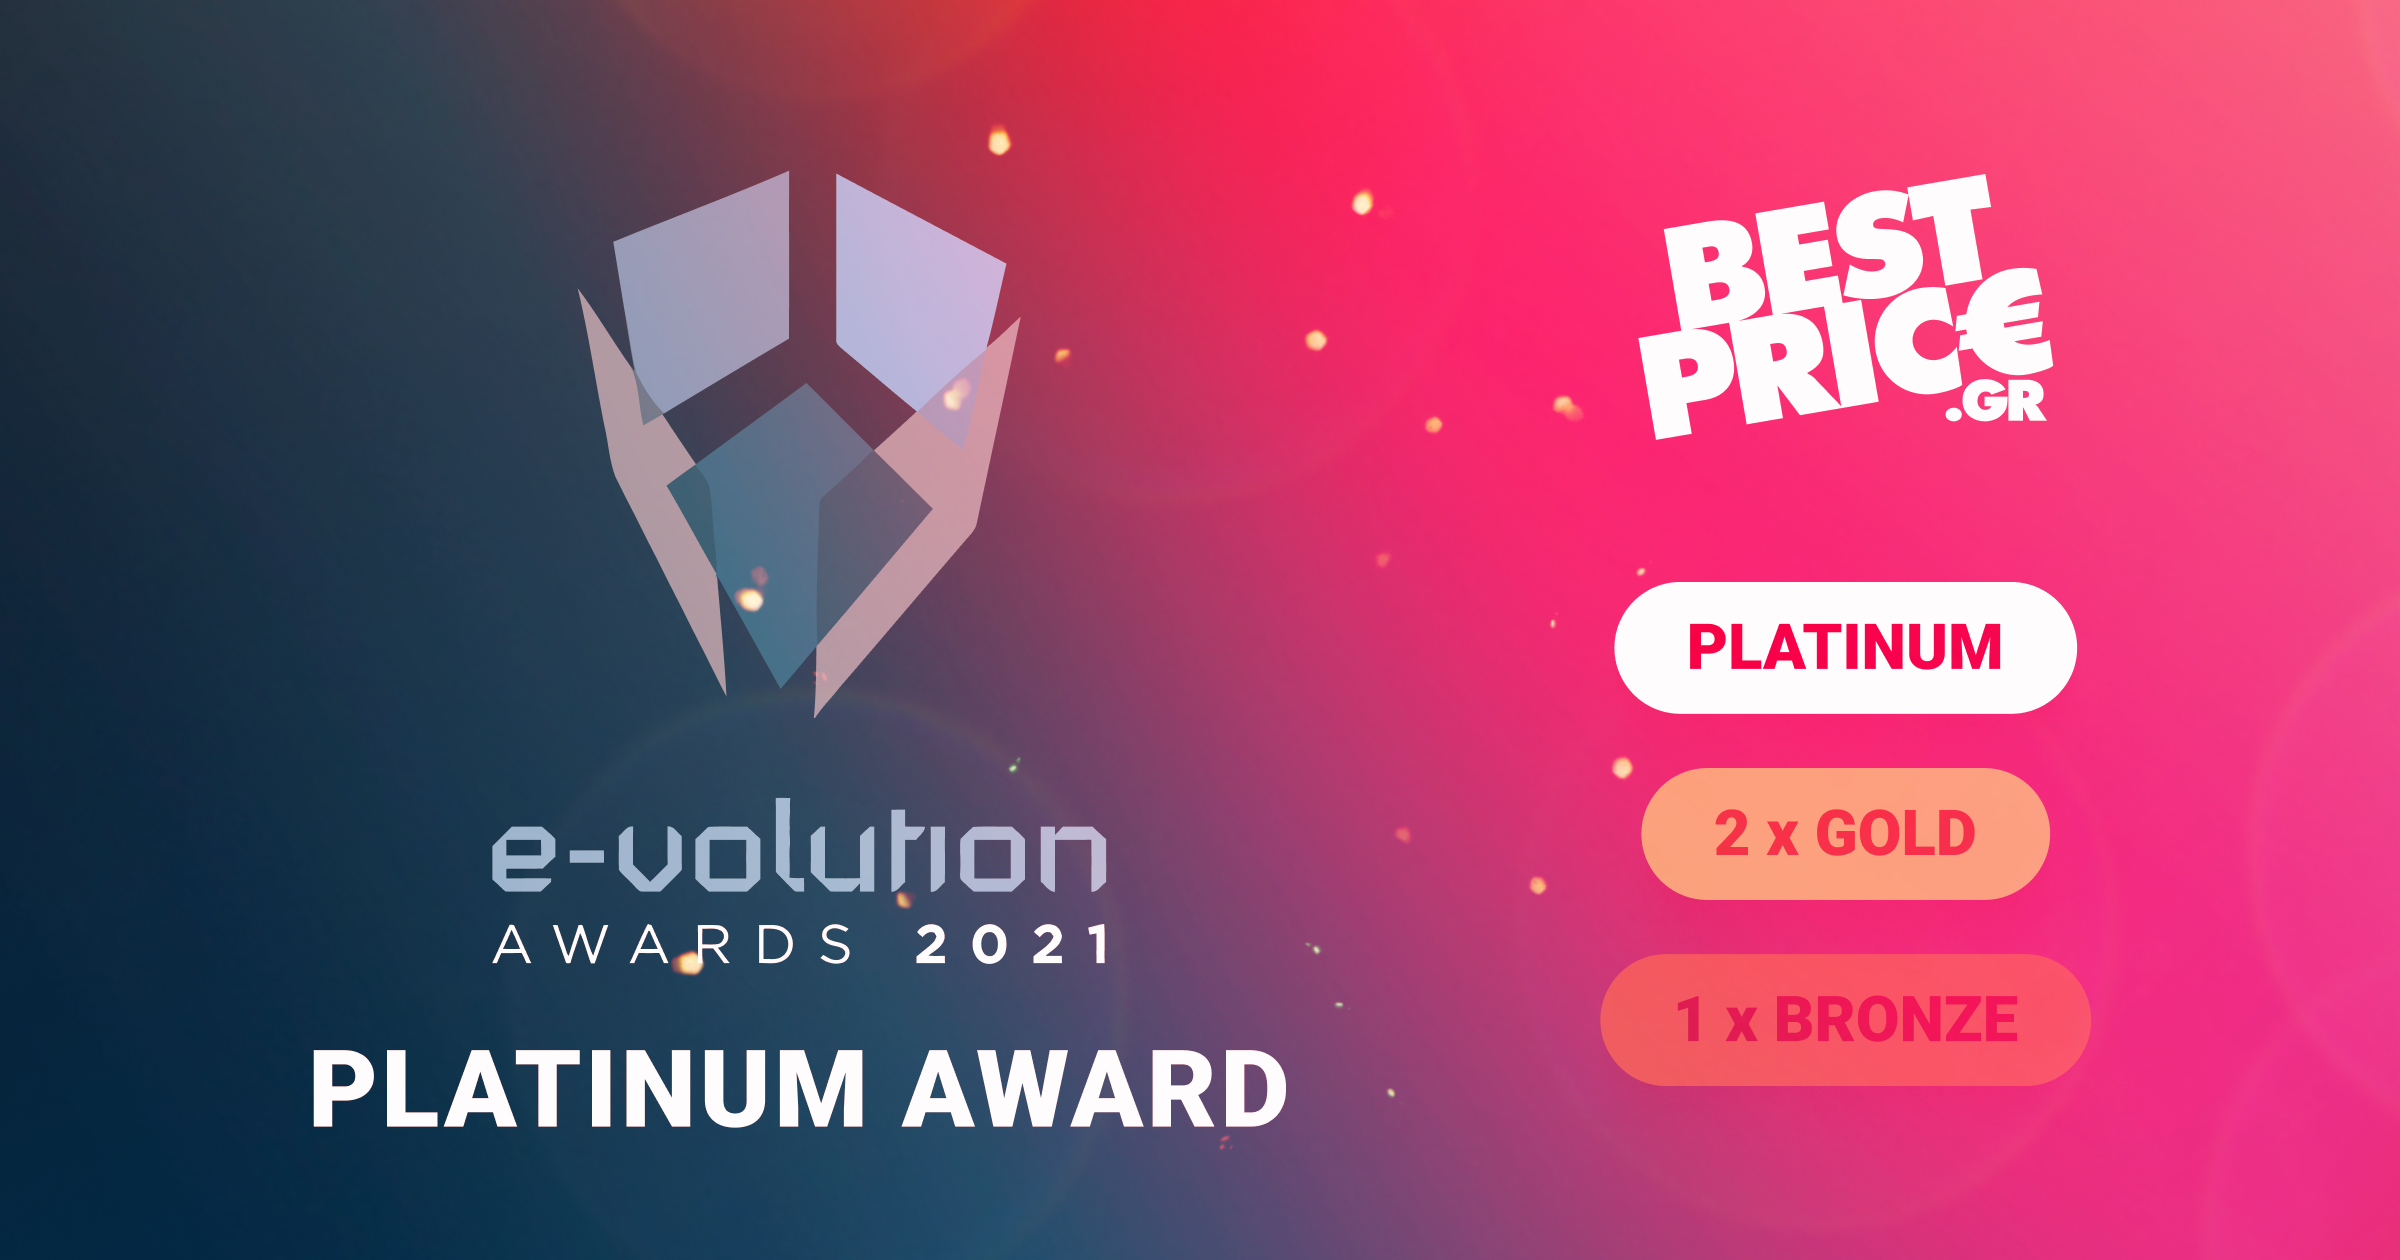 Platinum διάκριση για το BestPrice.gr στα E – volution Awards 2021